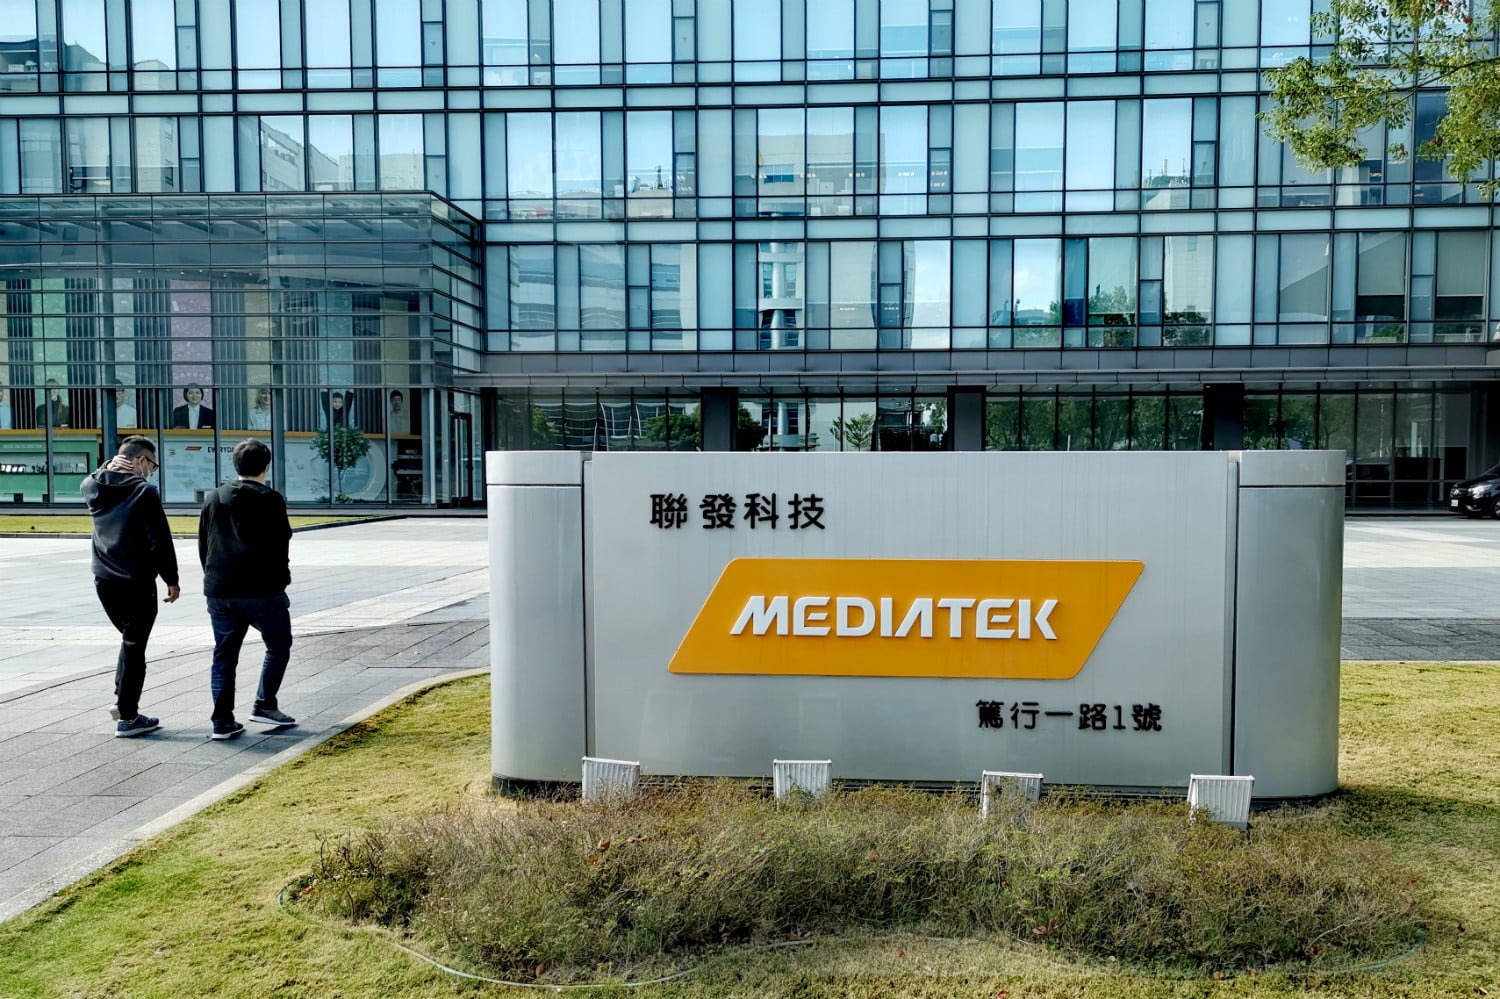 mediatek office 1500x999 1